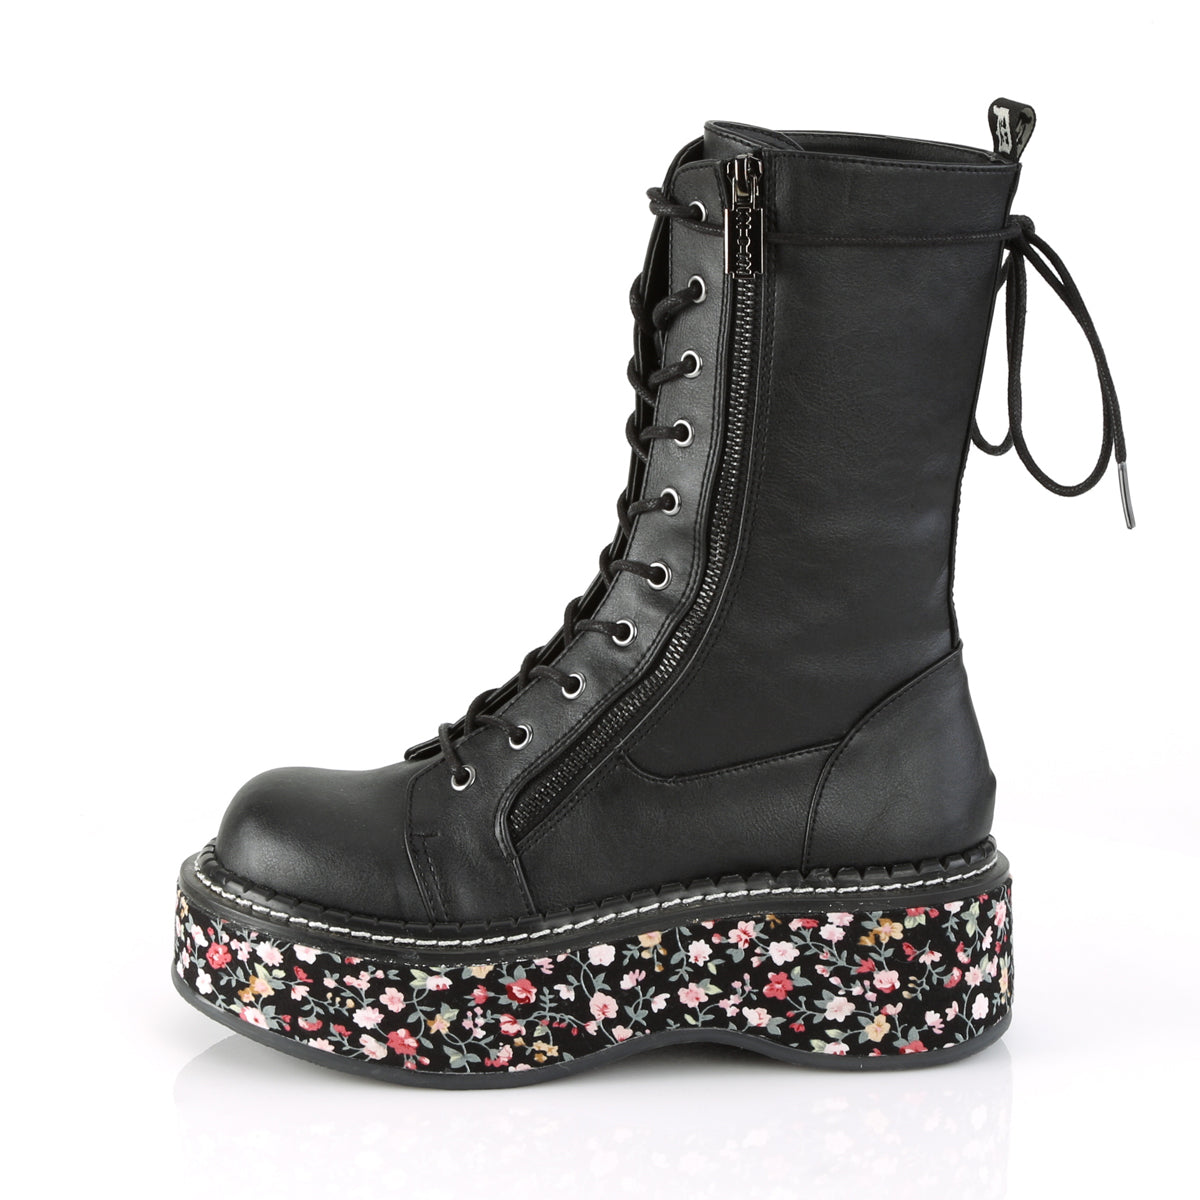 EMILY-350 Demonia Black Vegan Leather-Floral Fabric Women's Mid-Calf & Knee High Boots [Demonia Cult Alternative Footwear]